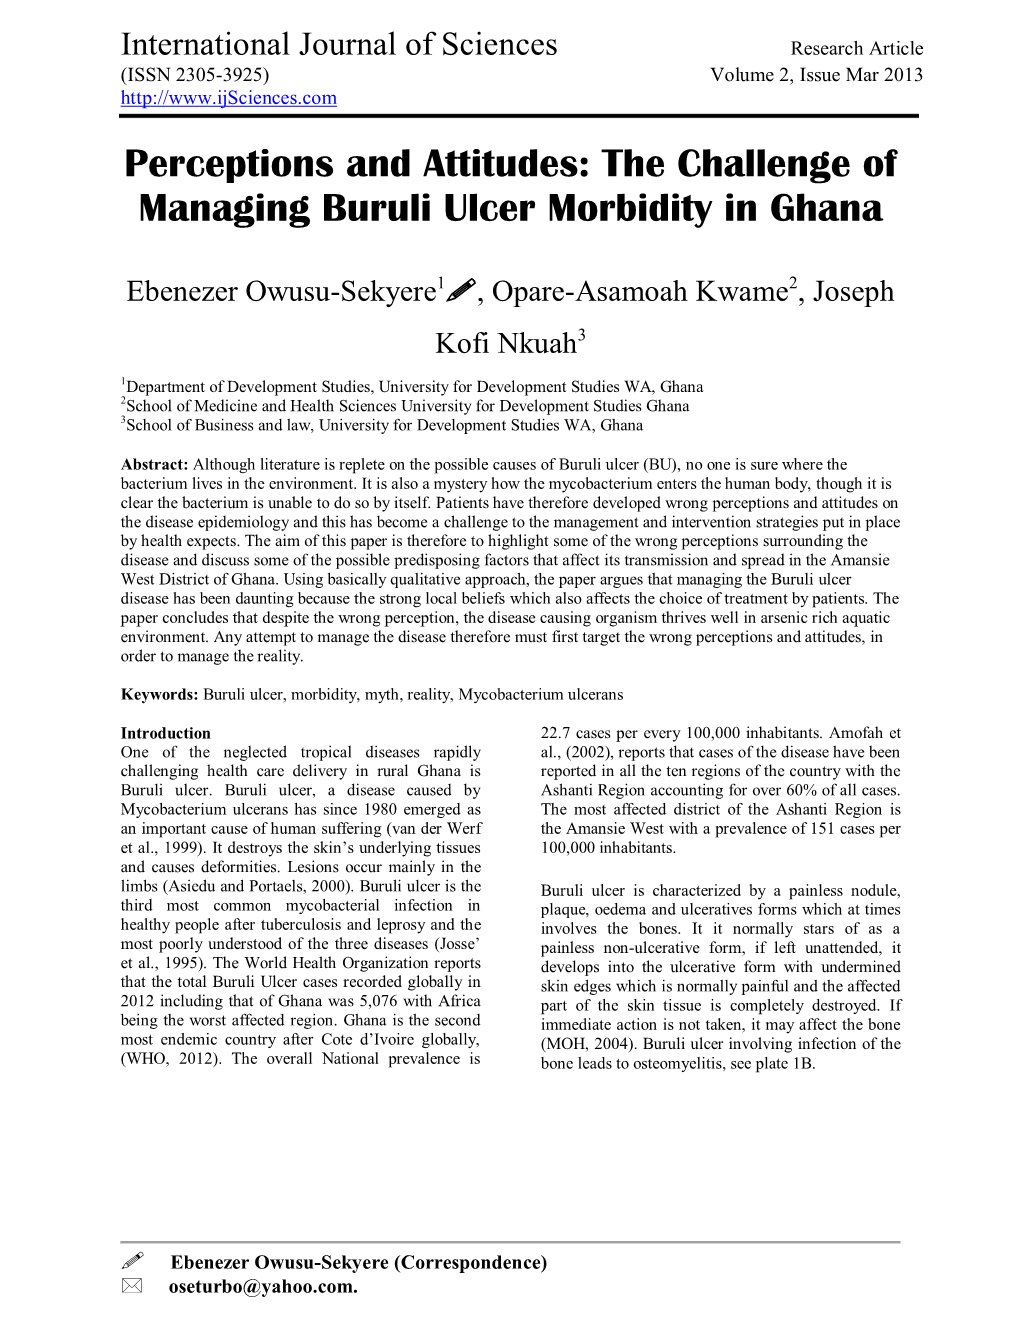 The Challenge of Managing Buruli Ulcer Morbidity in Ghana